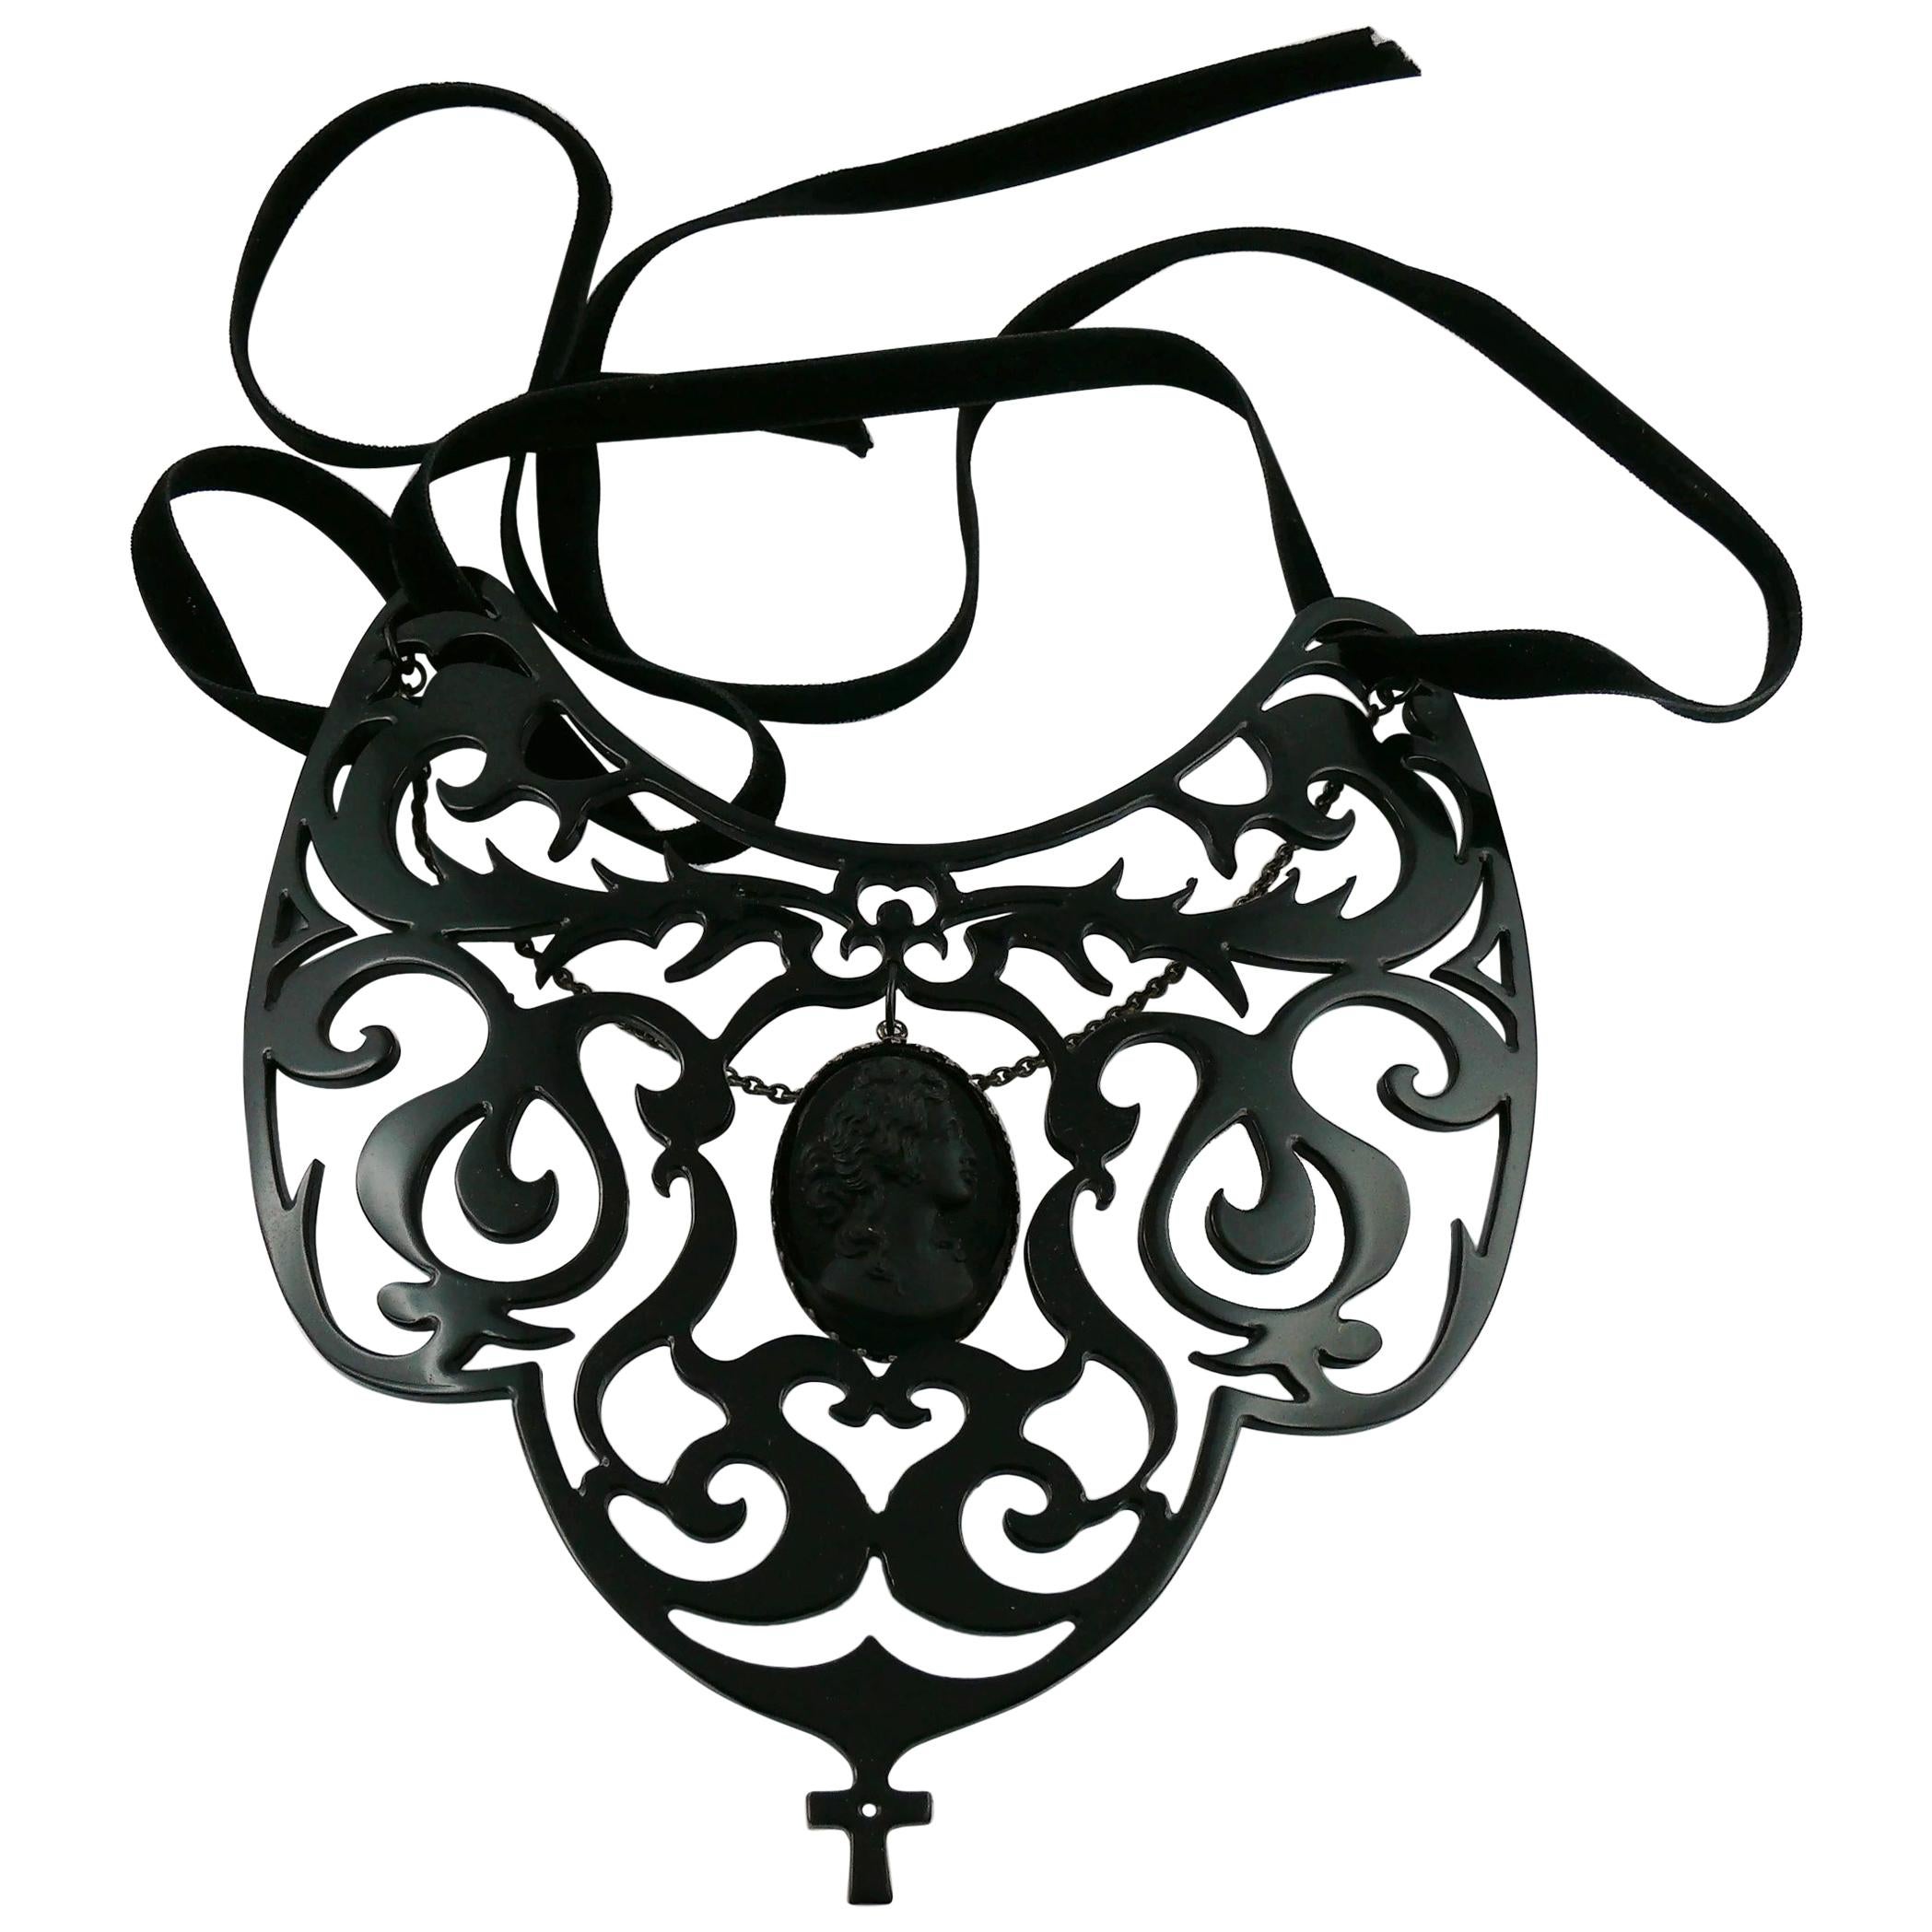 Jean Paul Gaultier Vintage Black Gothic Victorian Cameo Bib Necklace